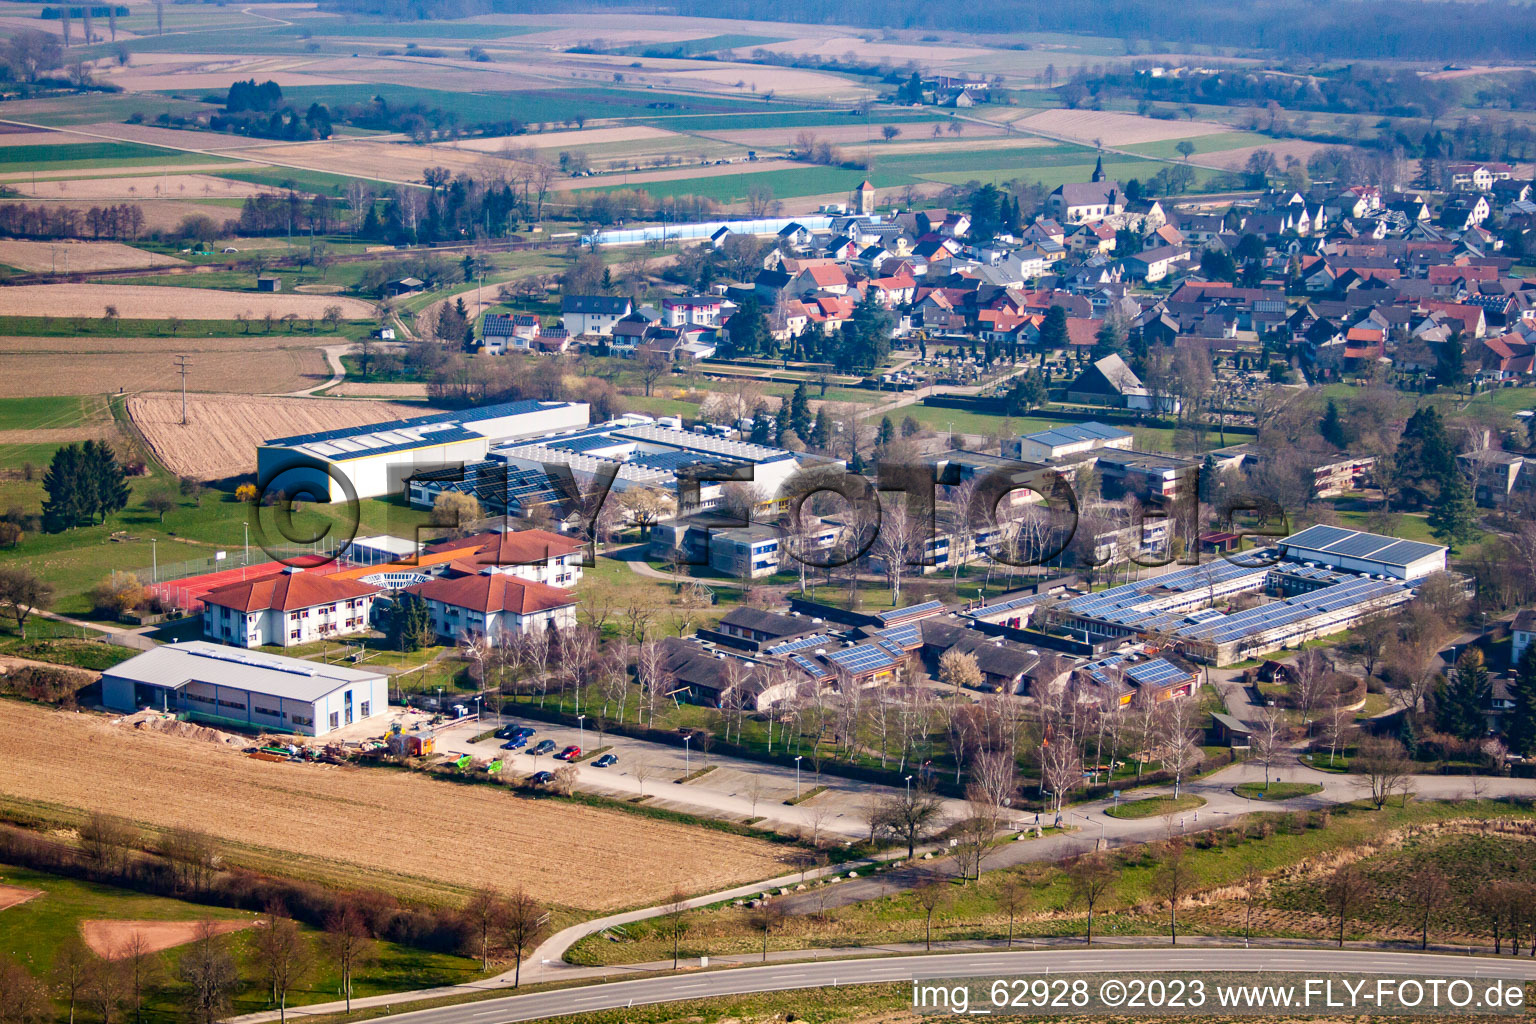 Oberlin School Association in the district Kork in Kehl in the state Baden-Wuerttemberg, Germany